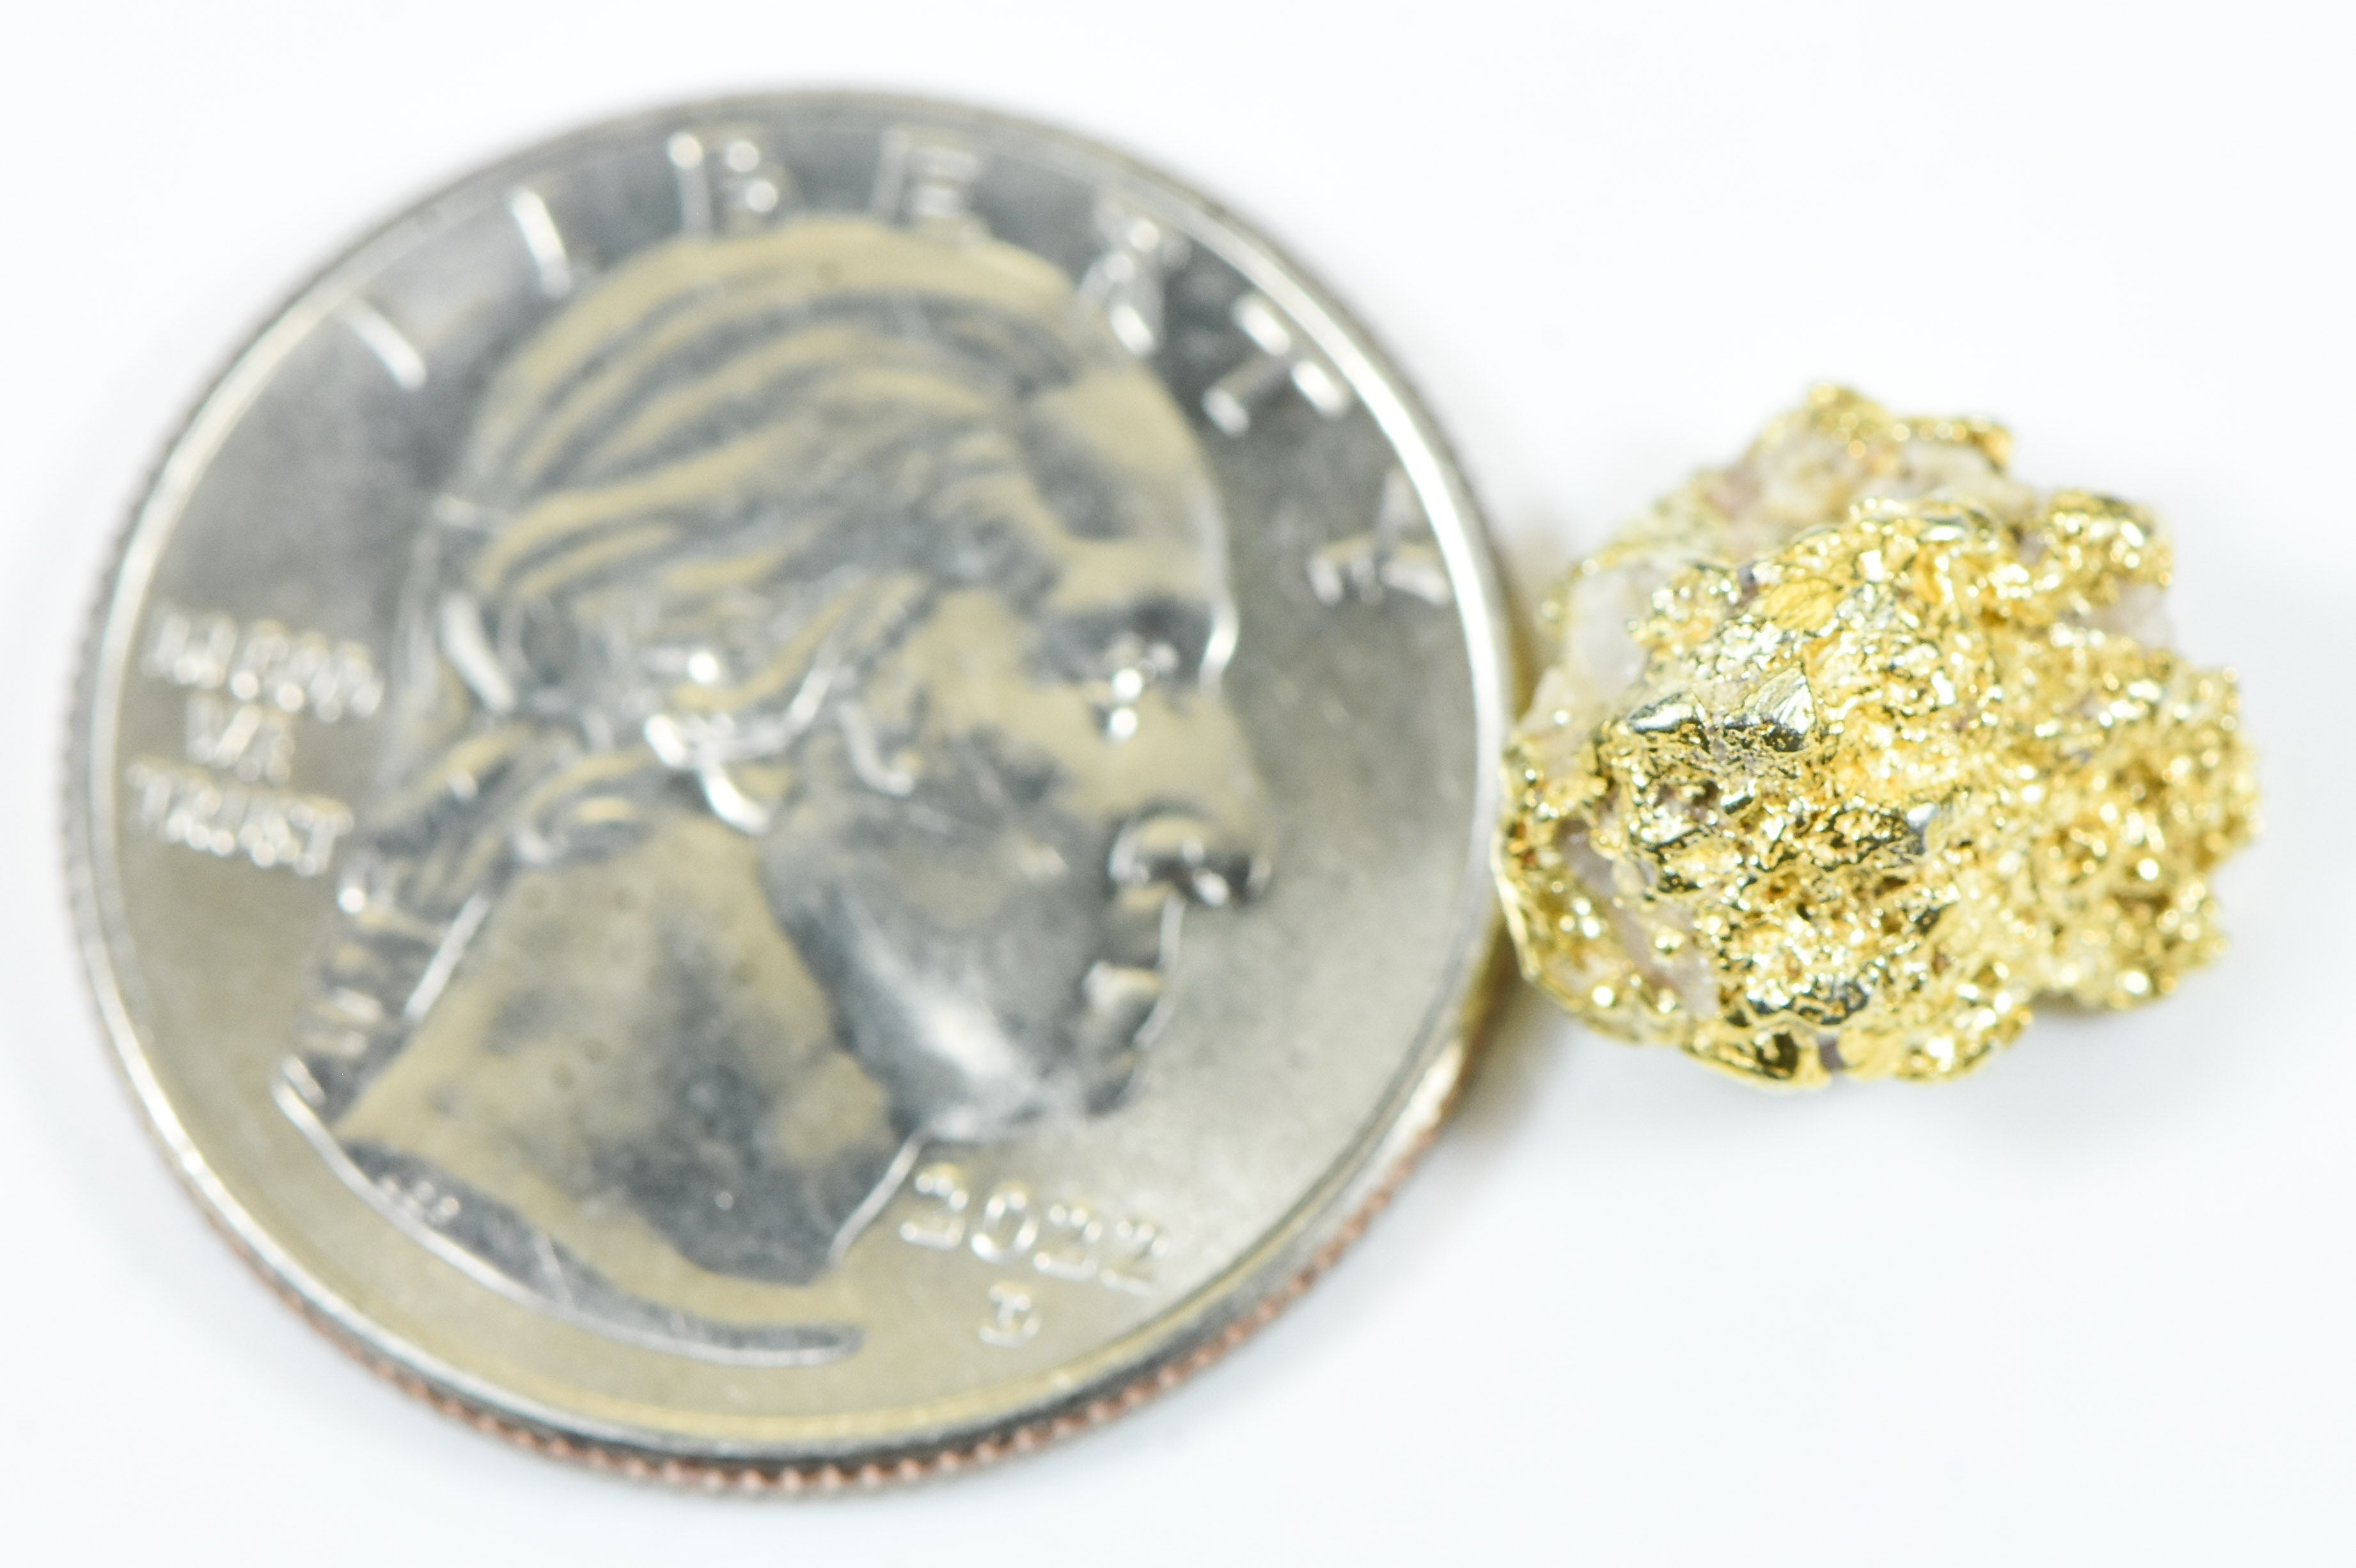 QN-40 "Alaskan BC Gold Nuggets with Quartz" Genuine 3.89 Grams